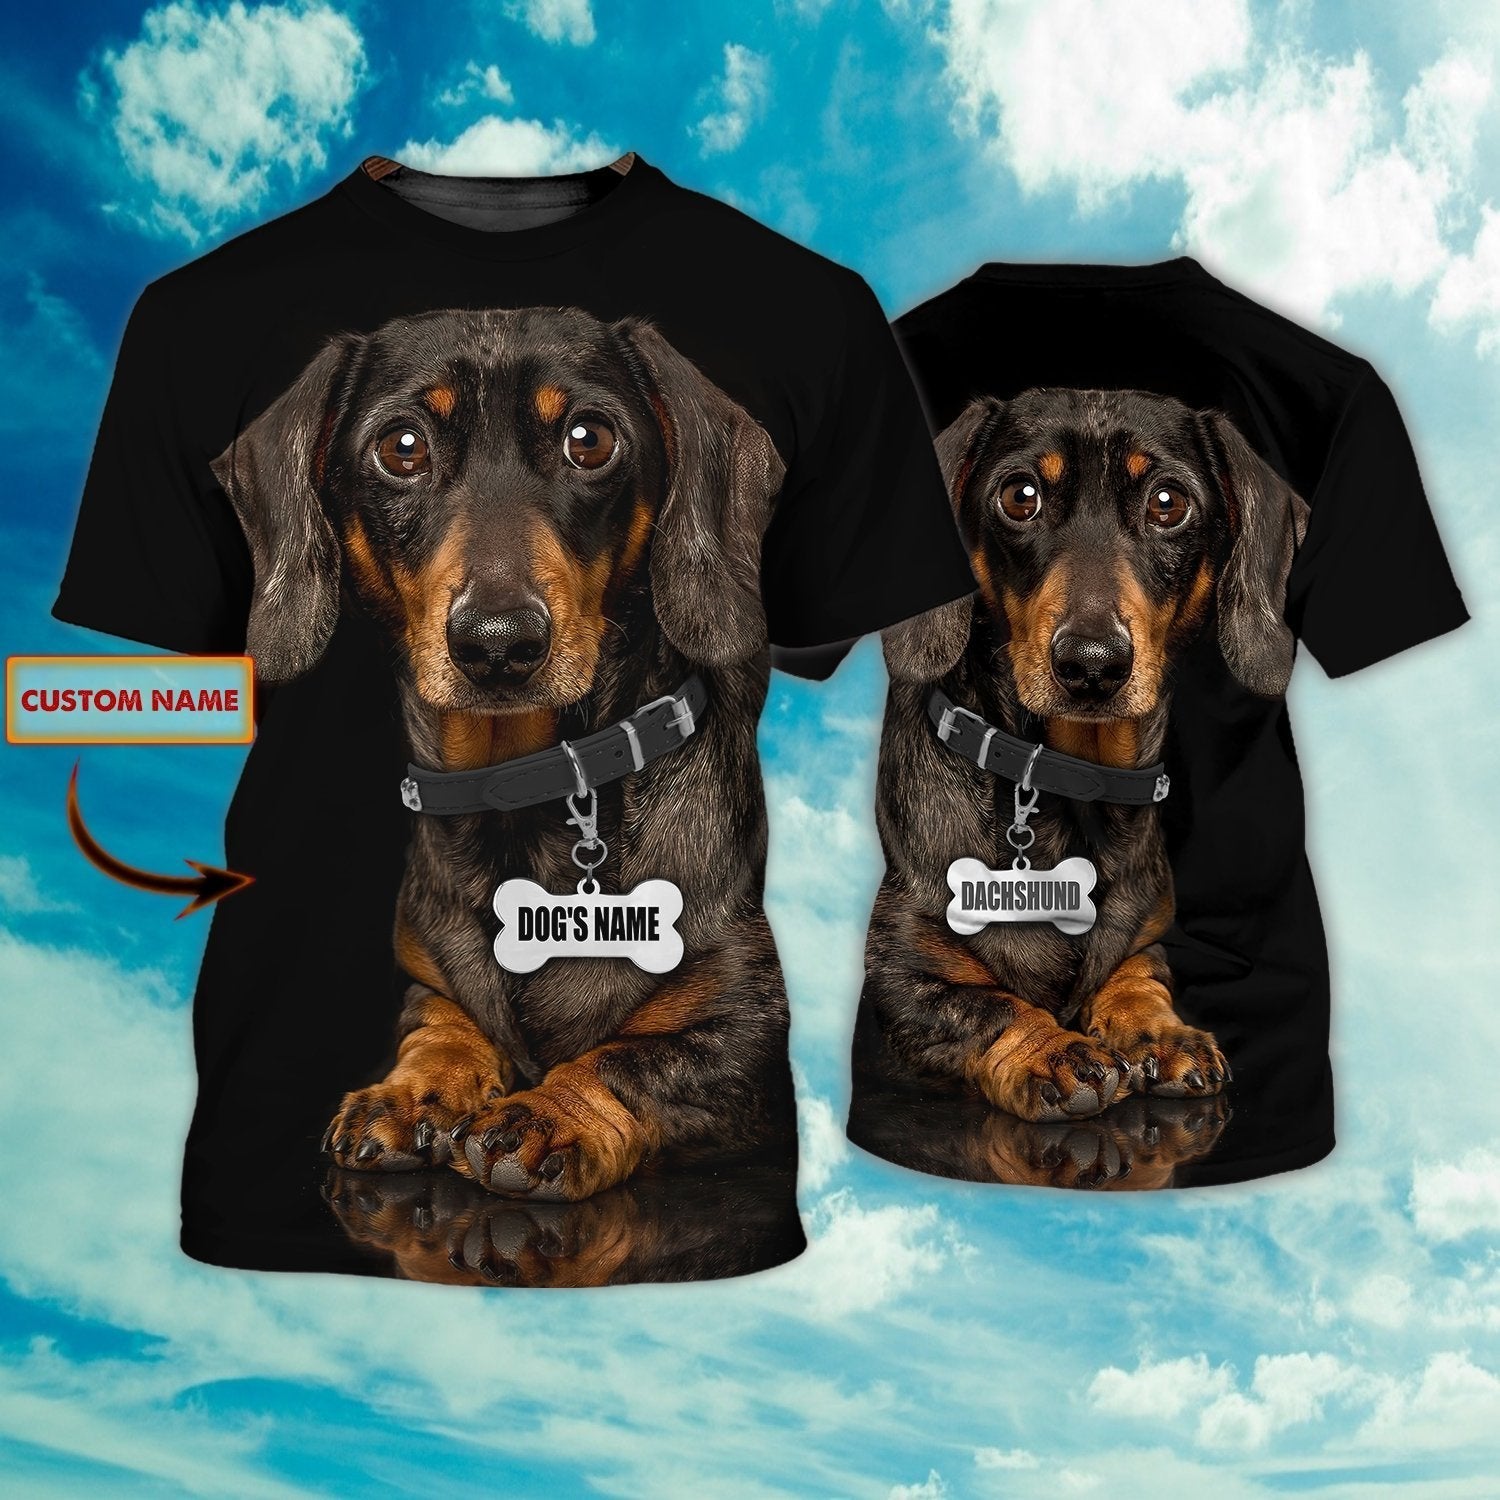 Custom Name Love Dachshund 3D Full Printed T Shirt/ Black Shirt For Dog Lovers